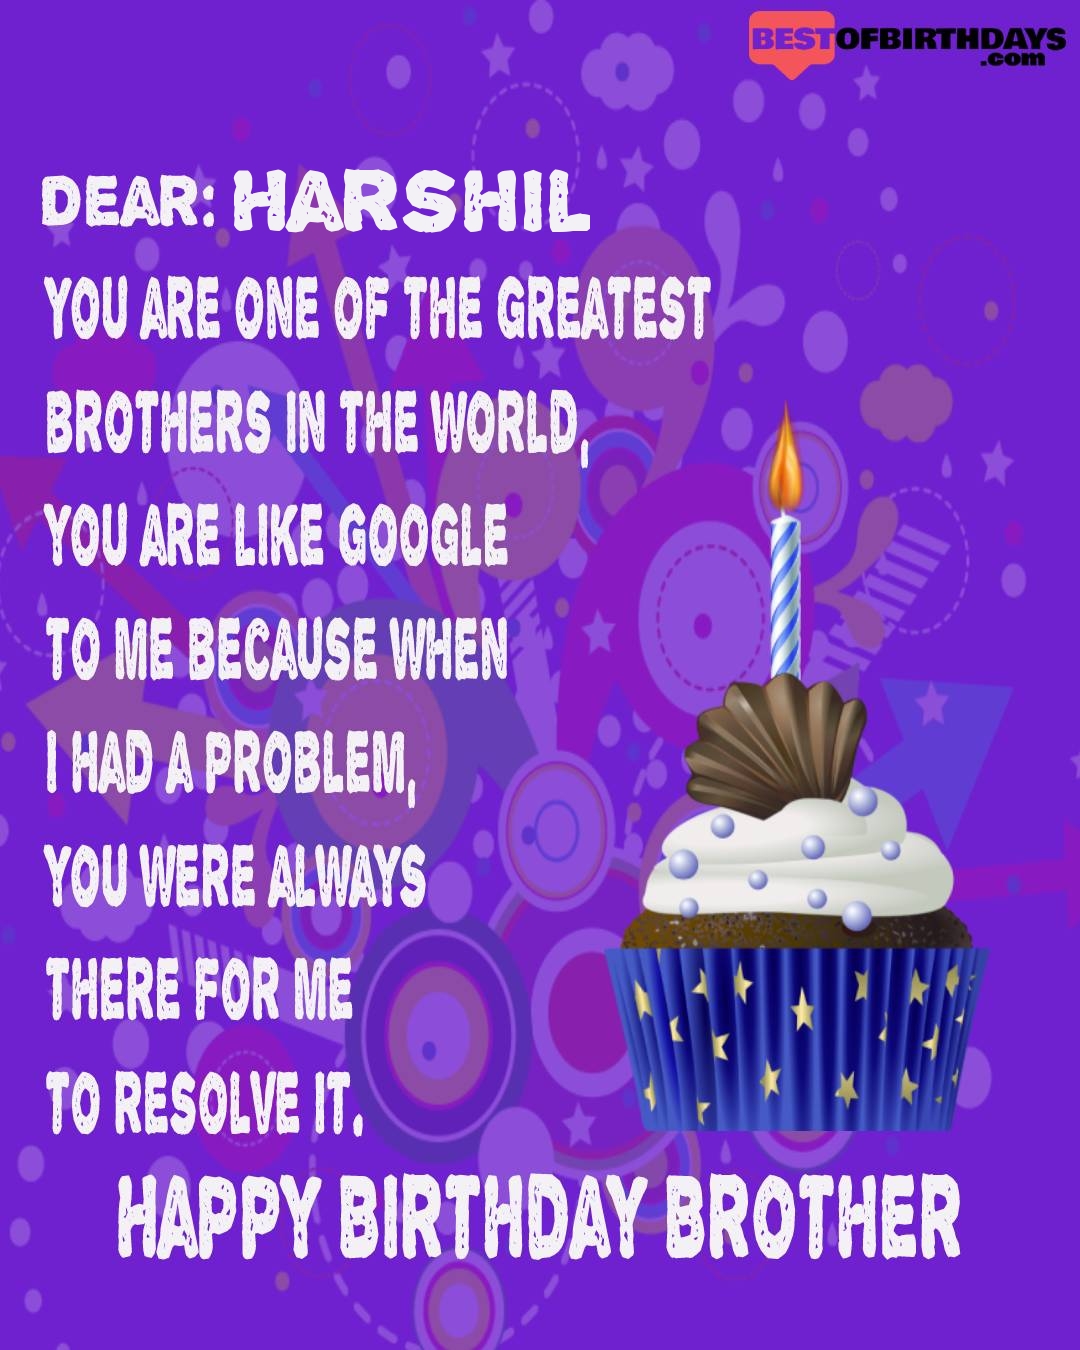 Happy birthday harshil bhai brother bro